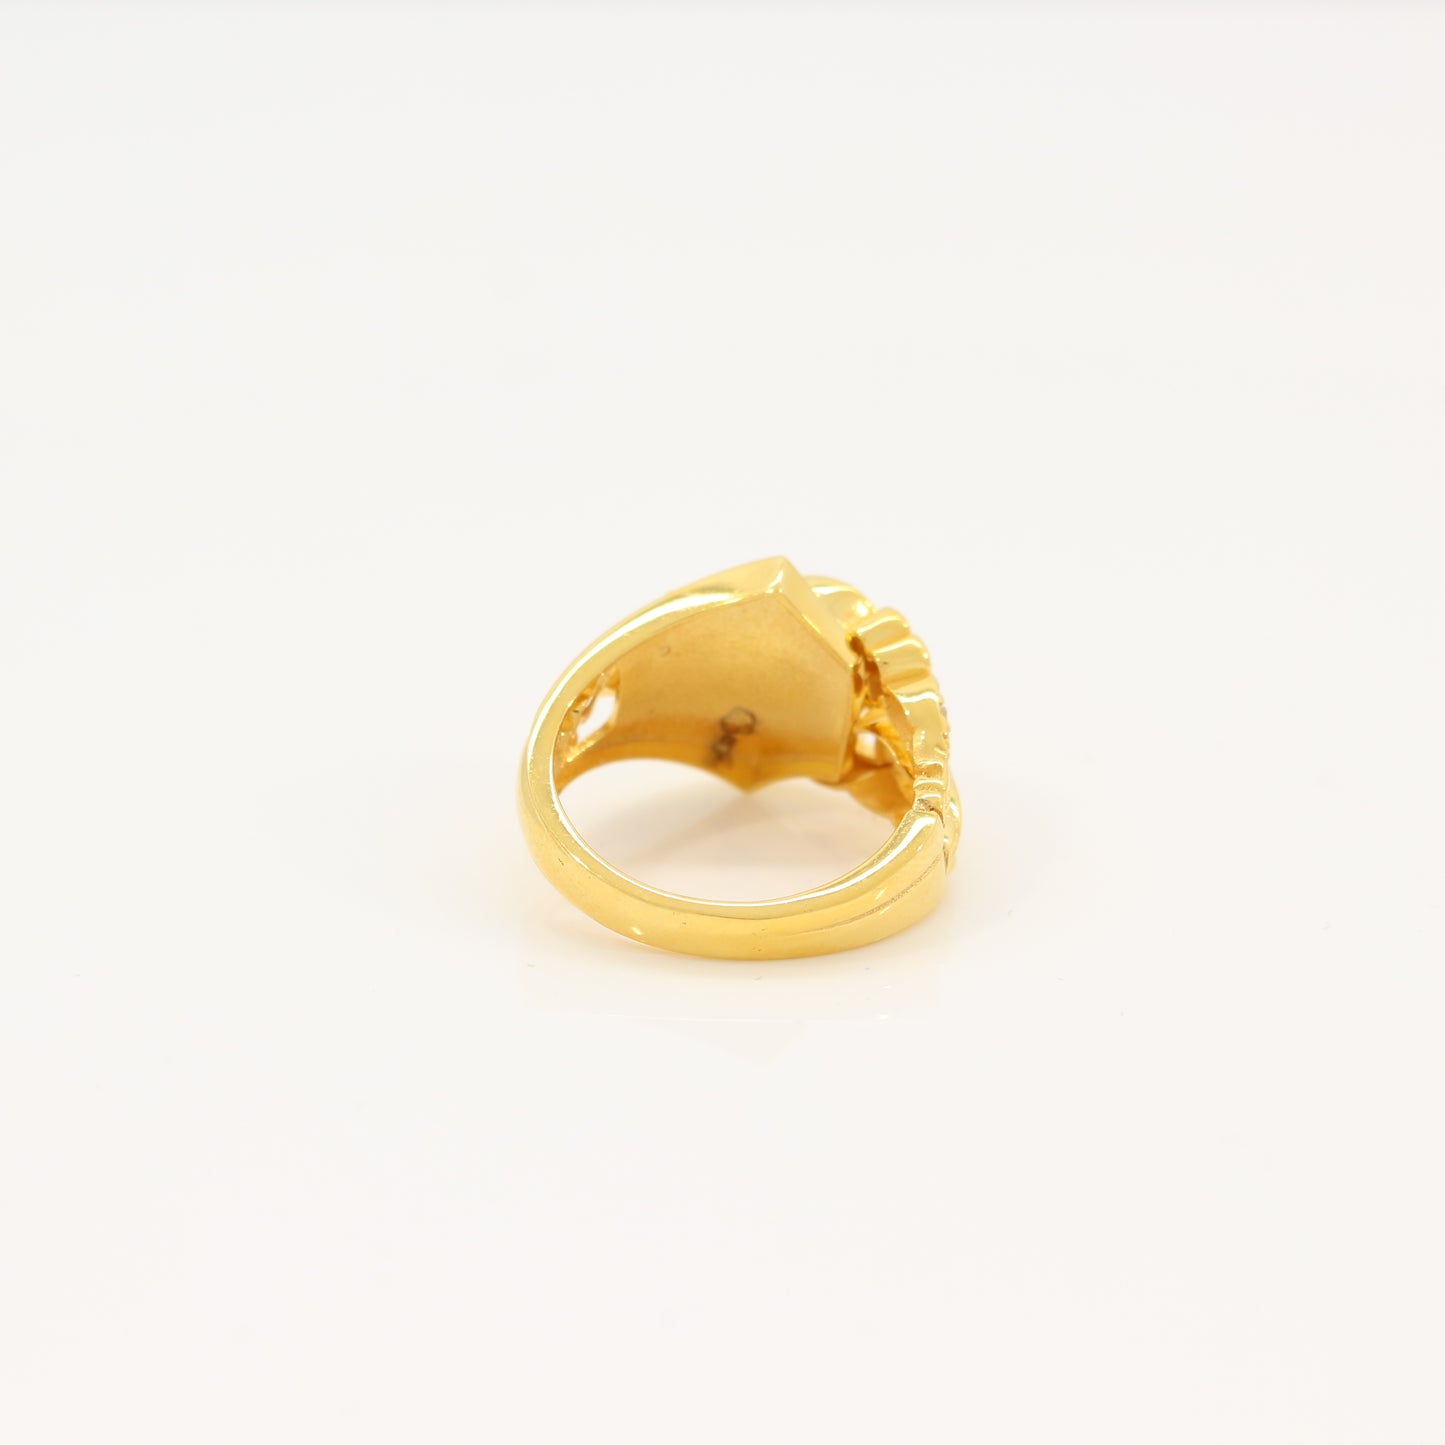 21K Gold Ring (size 7)